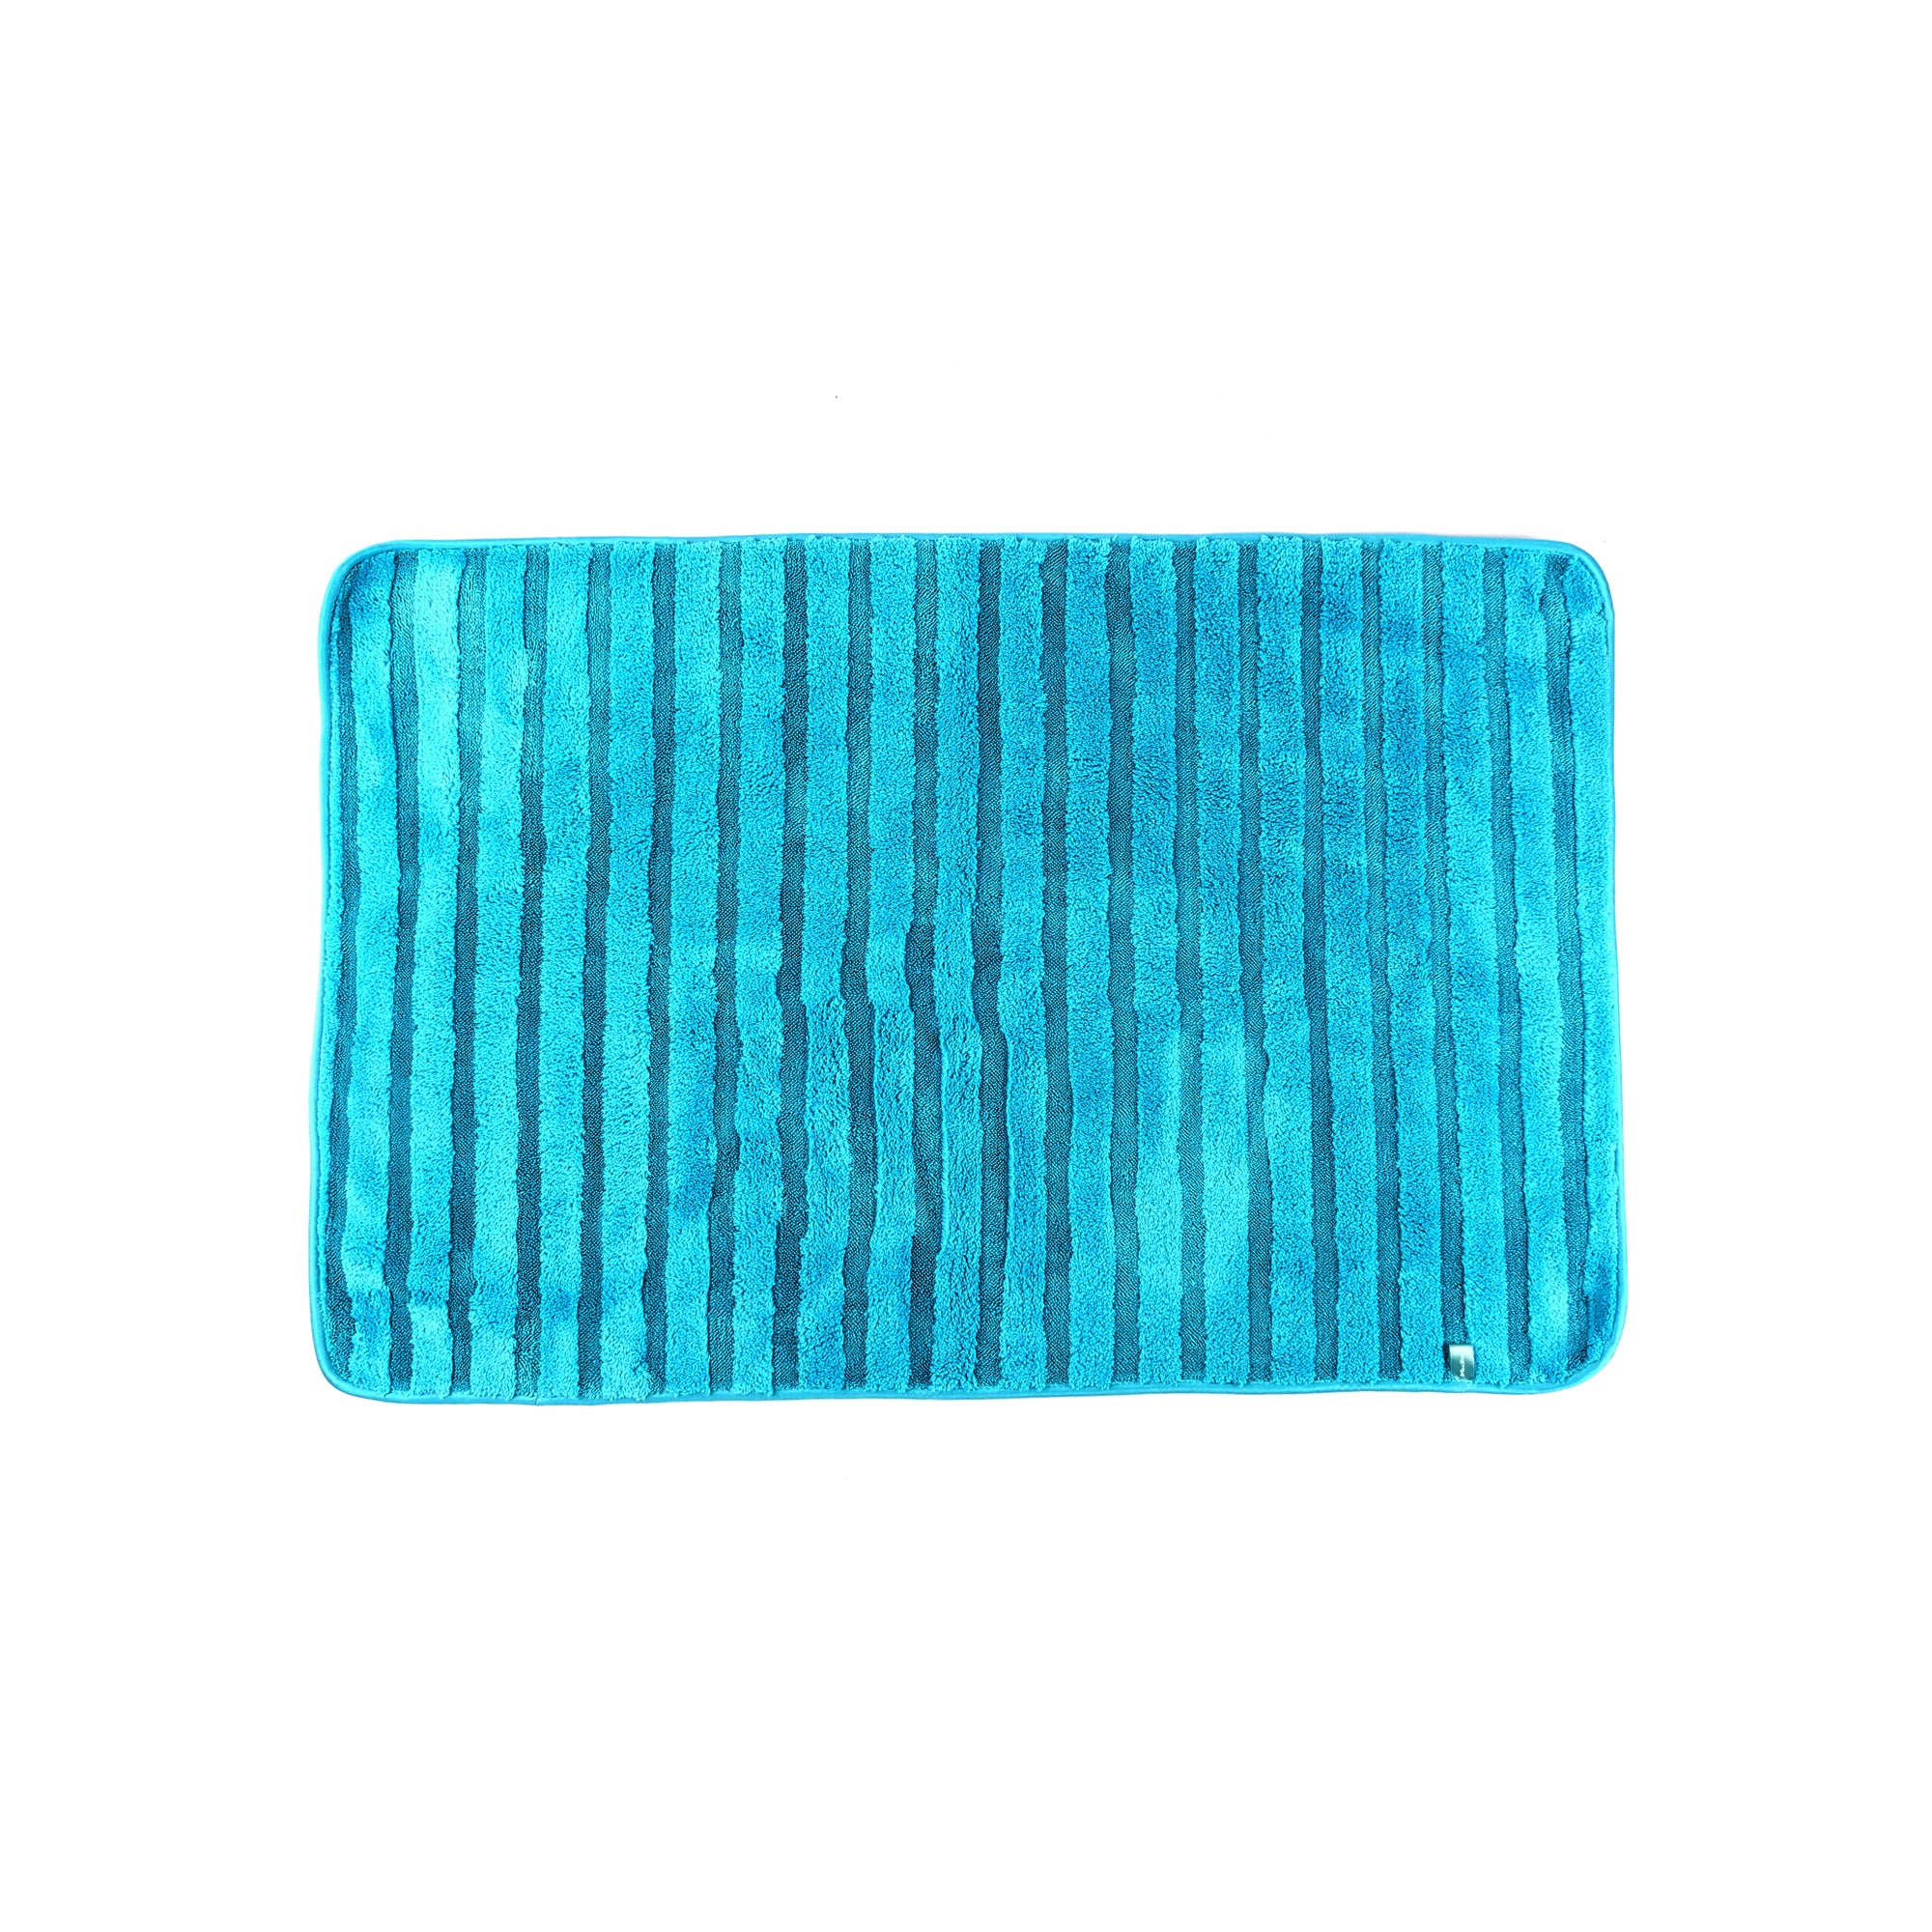 MAXSHINE - Vortex Towel (Microfibre de séchage)